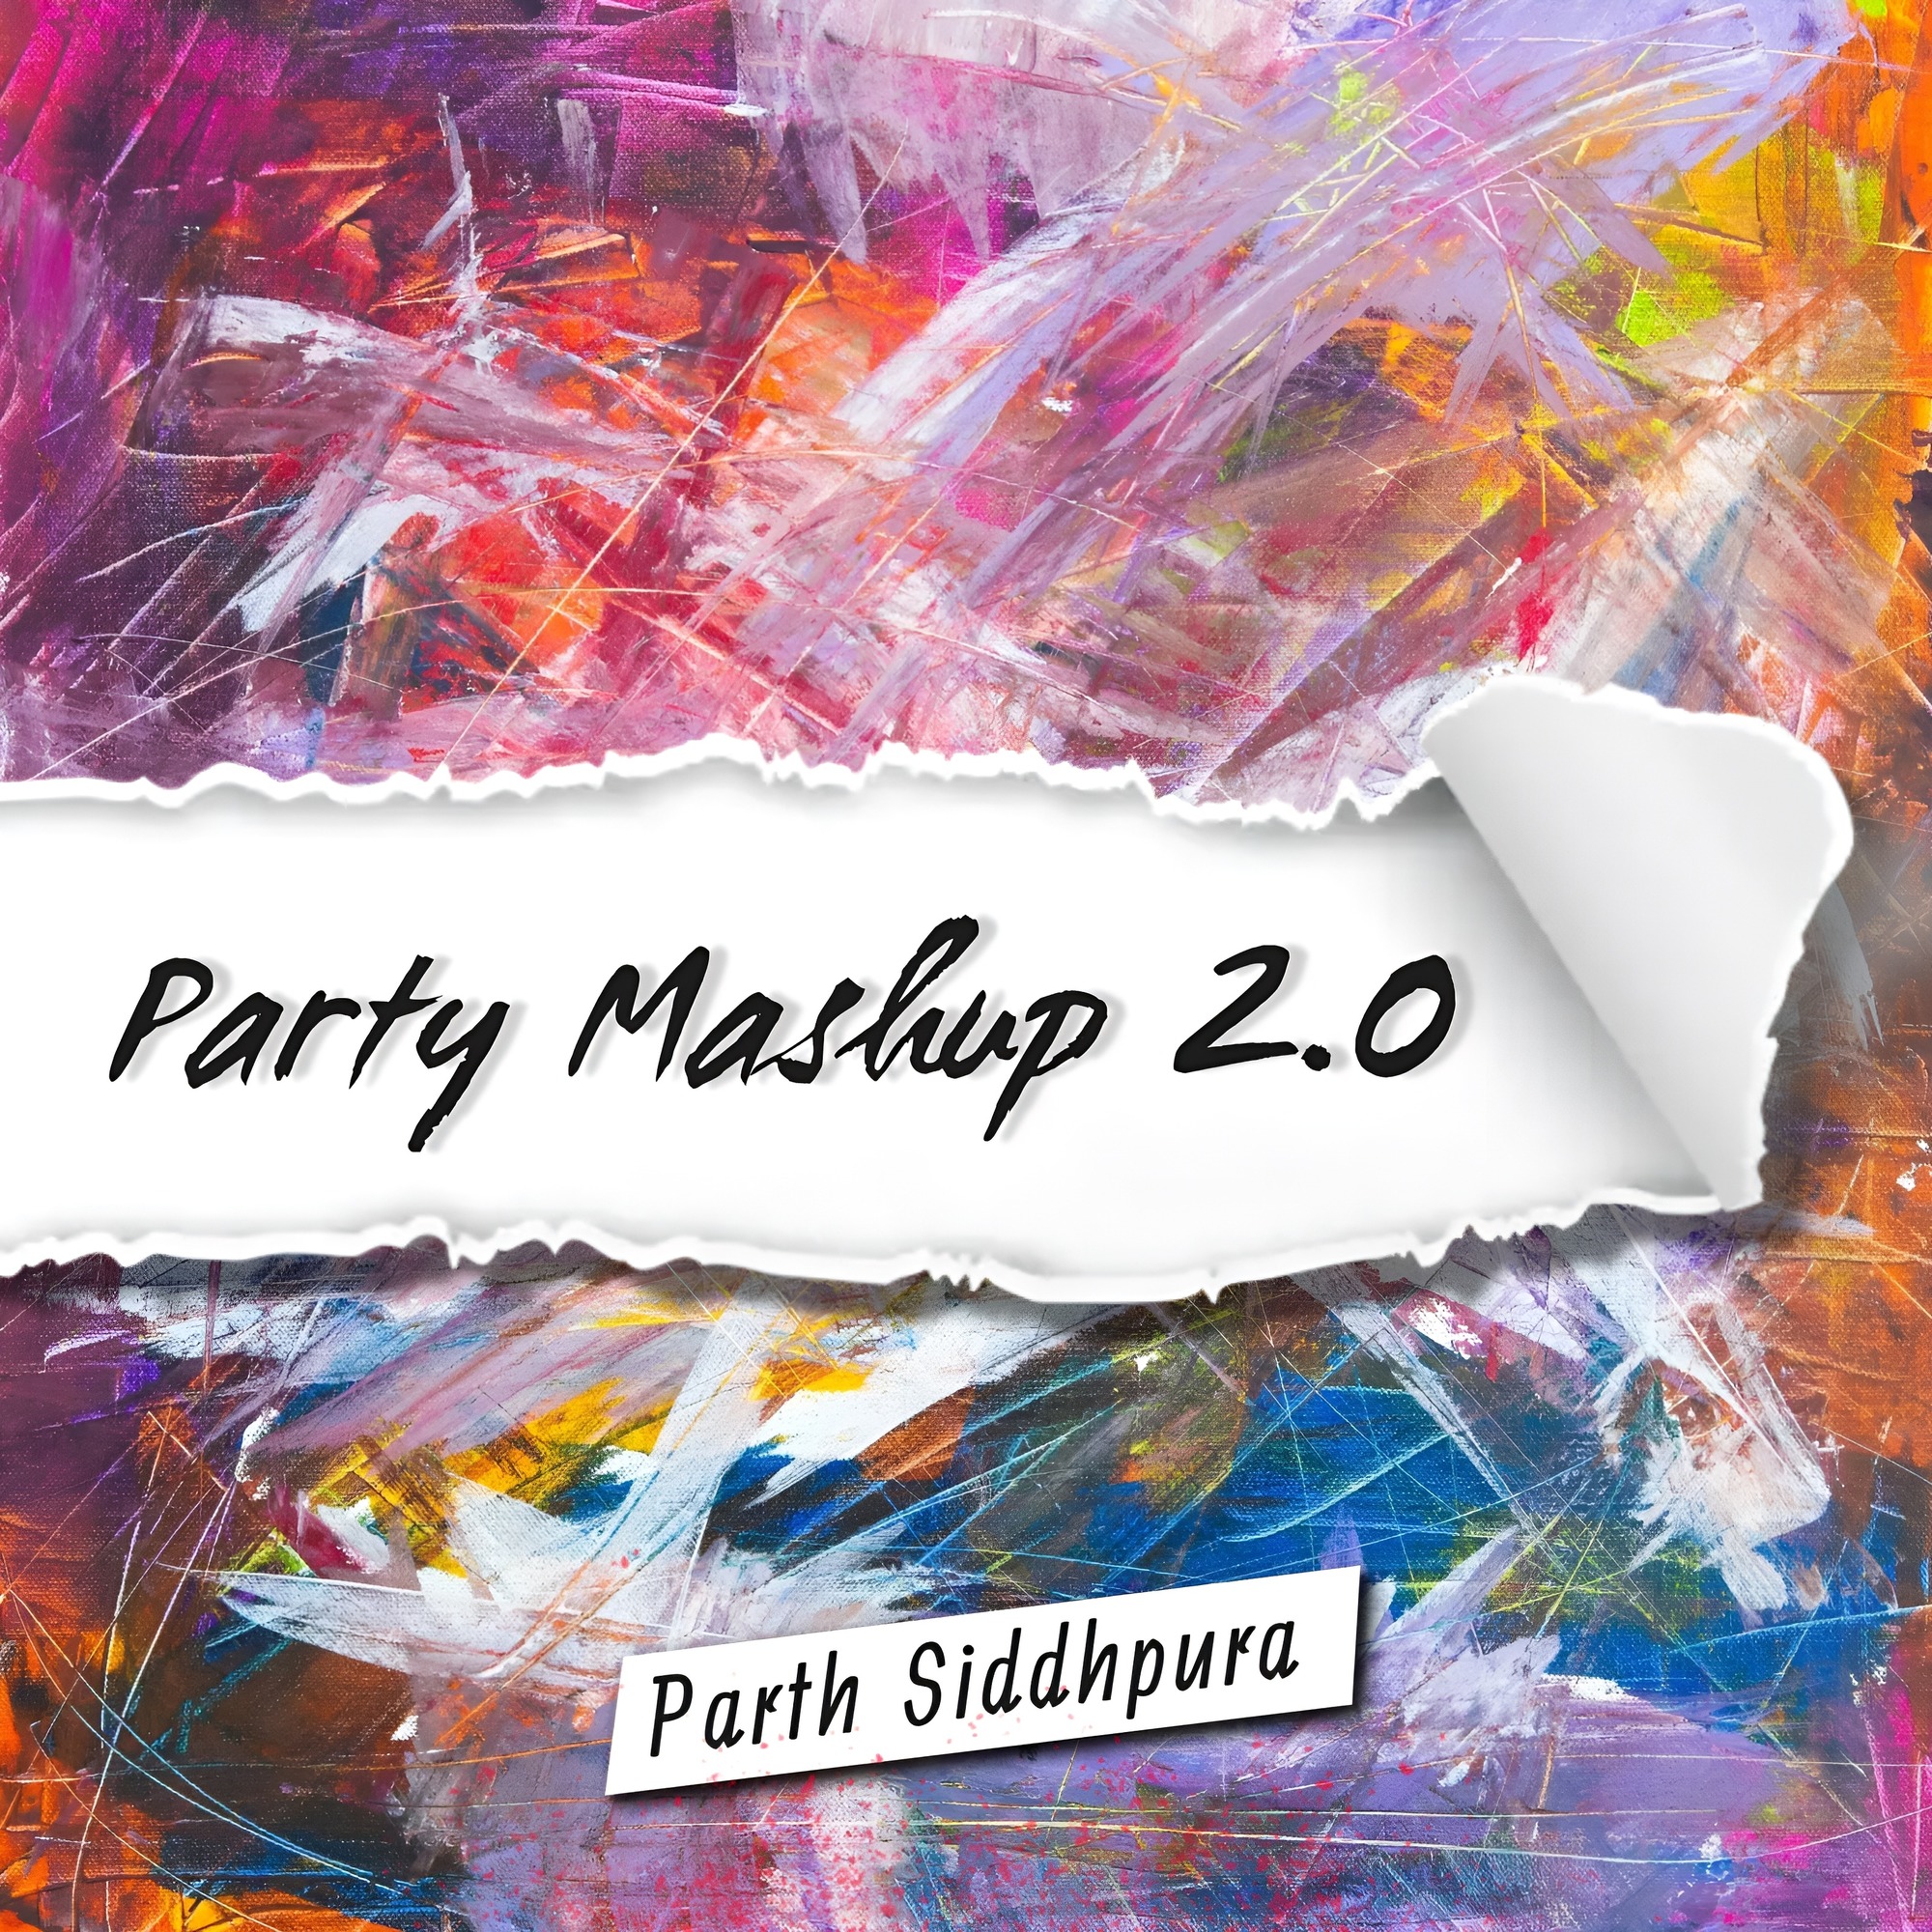 Party Mashup 2.0.jpg